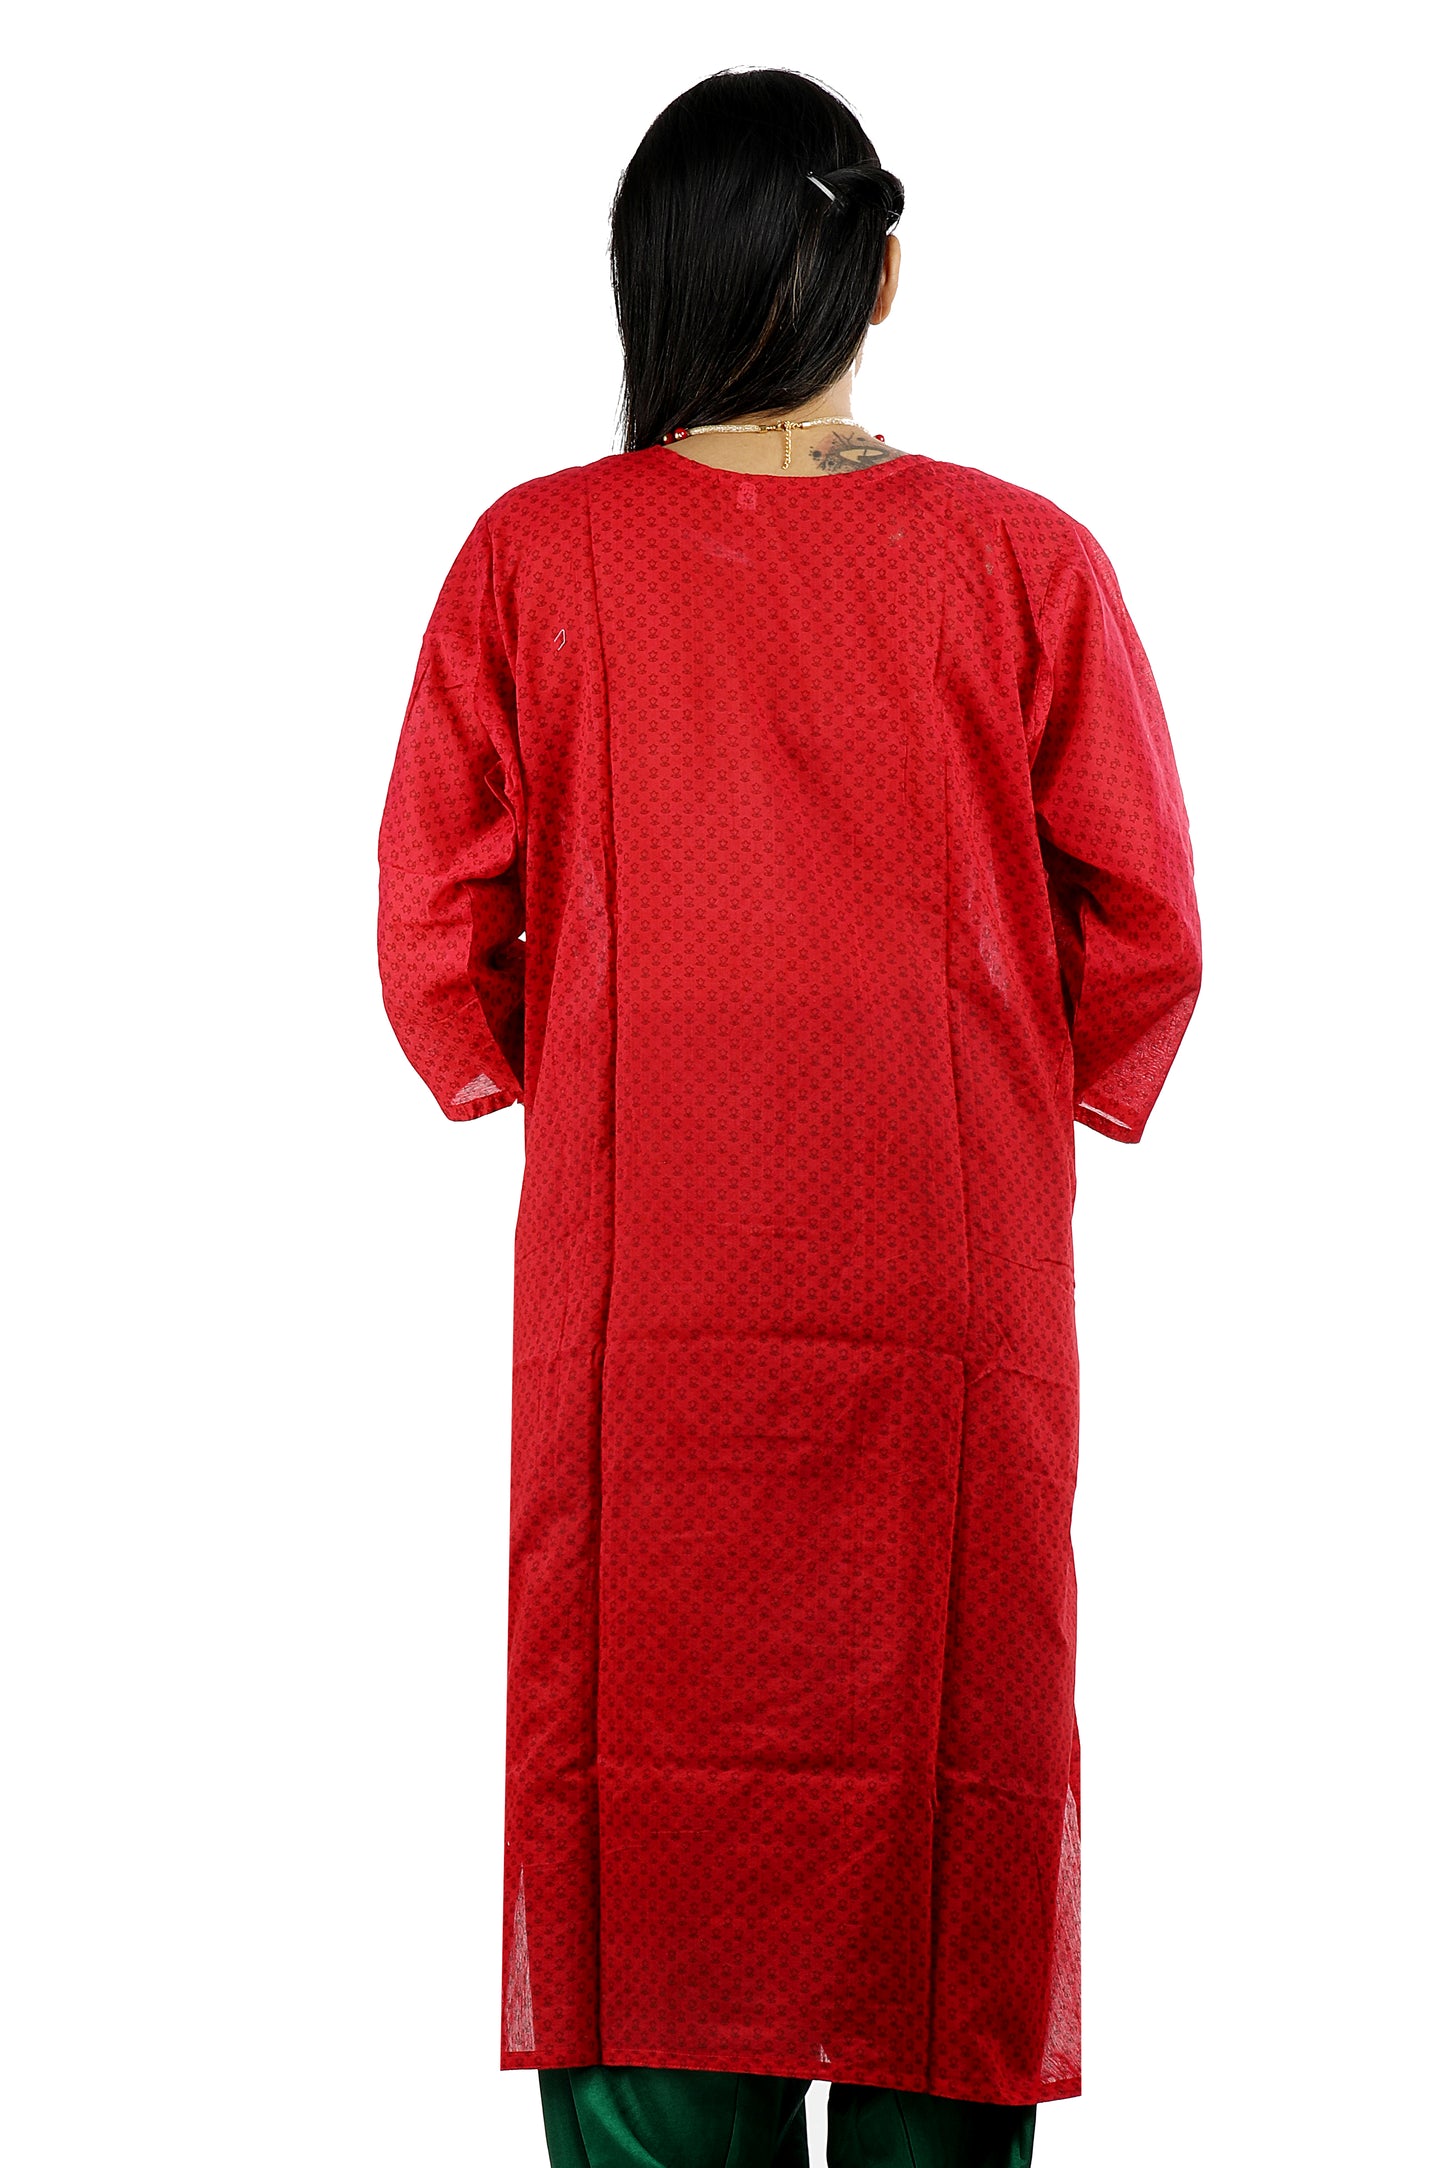 Red  Green Embroidered Cotton  Salwar kameez Dress Plus Size 52